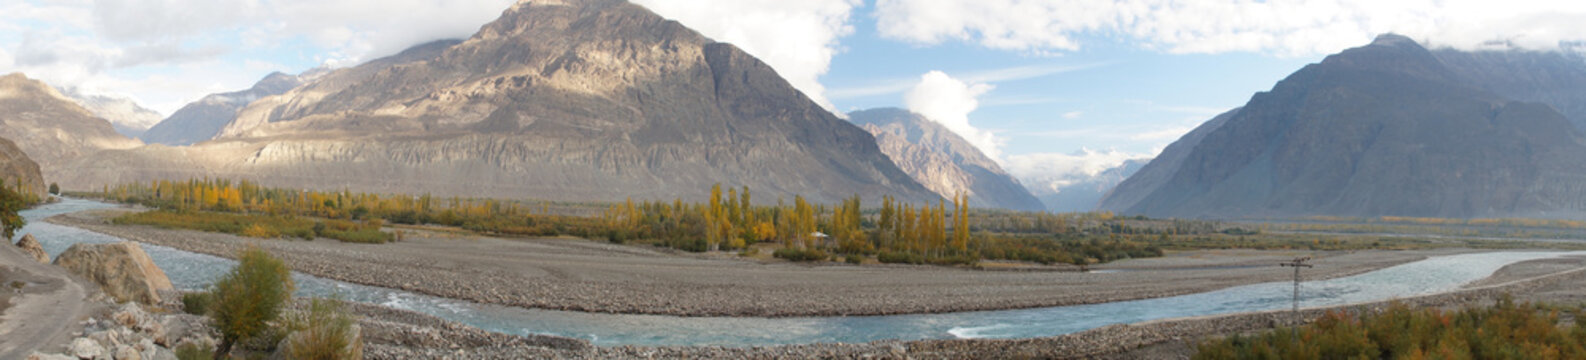 Panoramic view of mountain range near Gakuch,Northern Pakistan